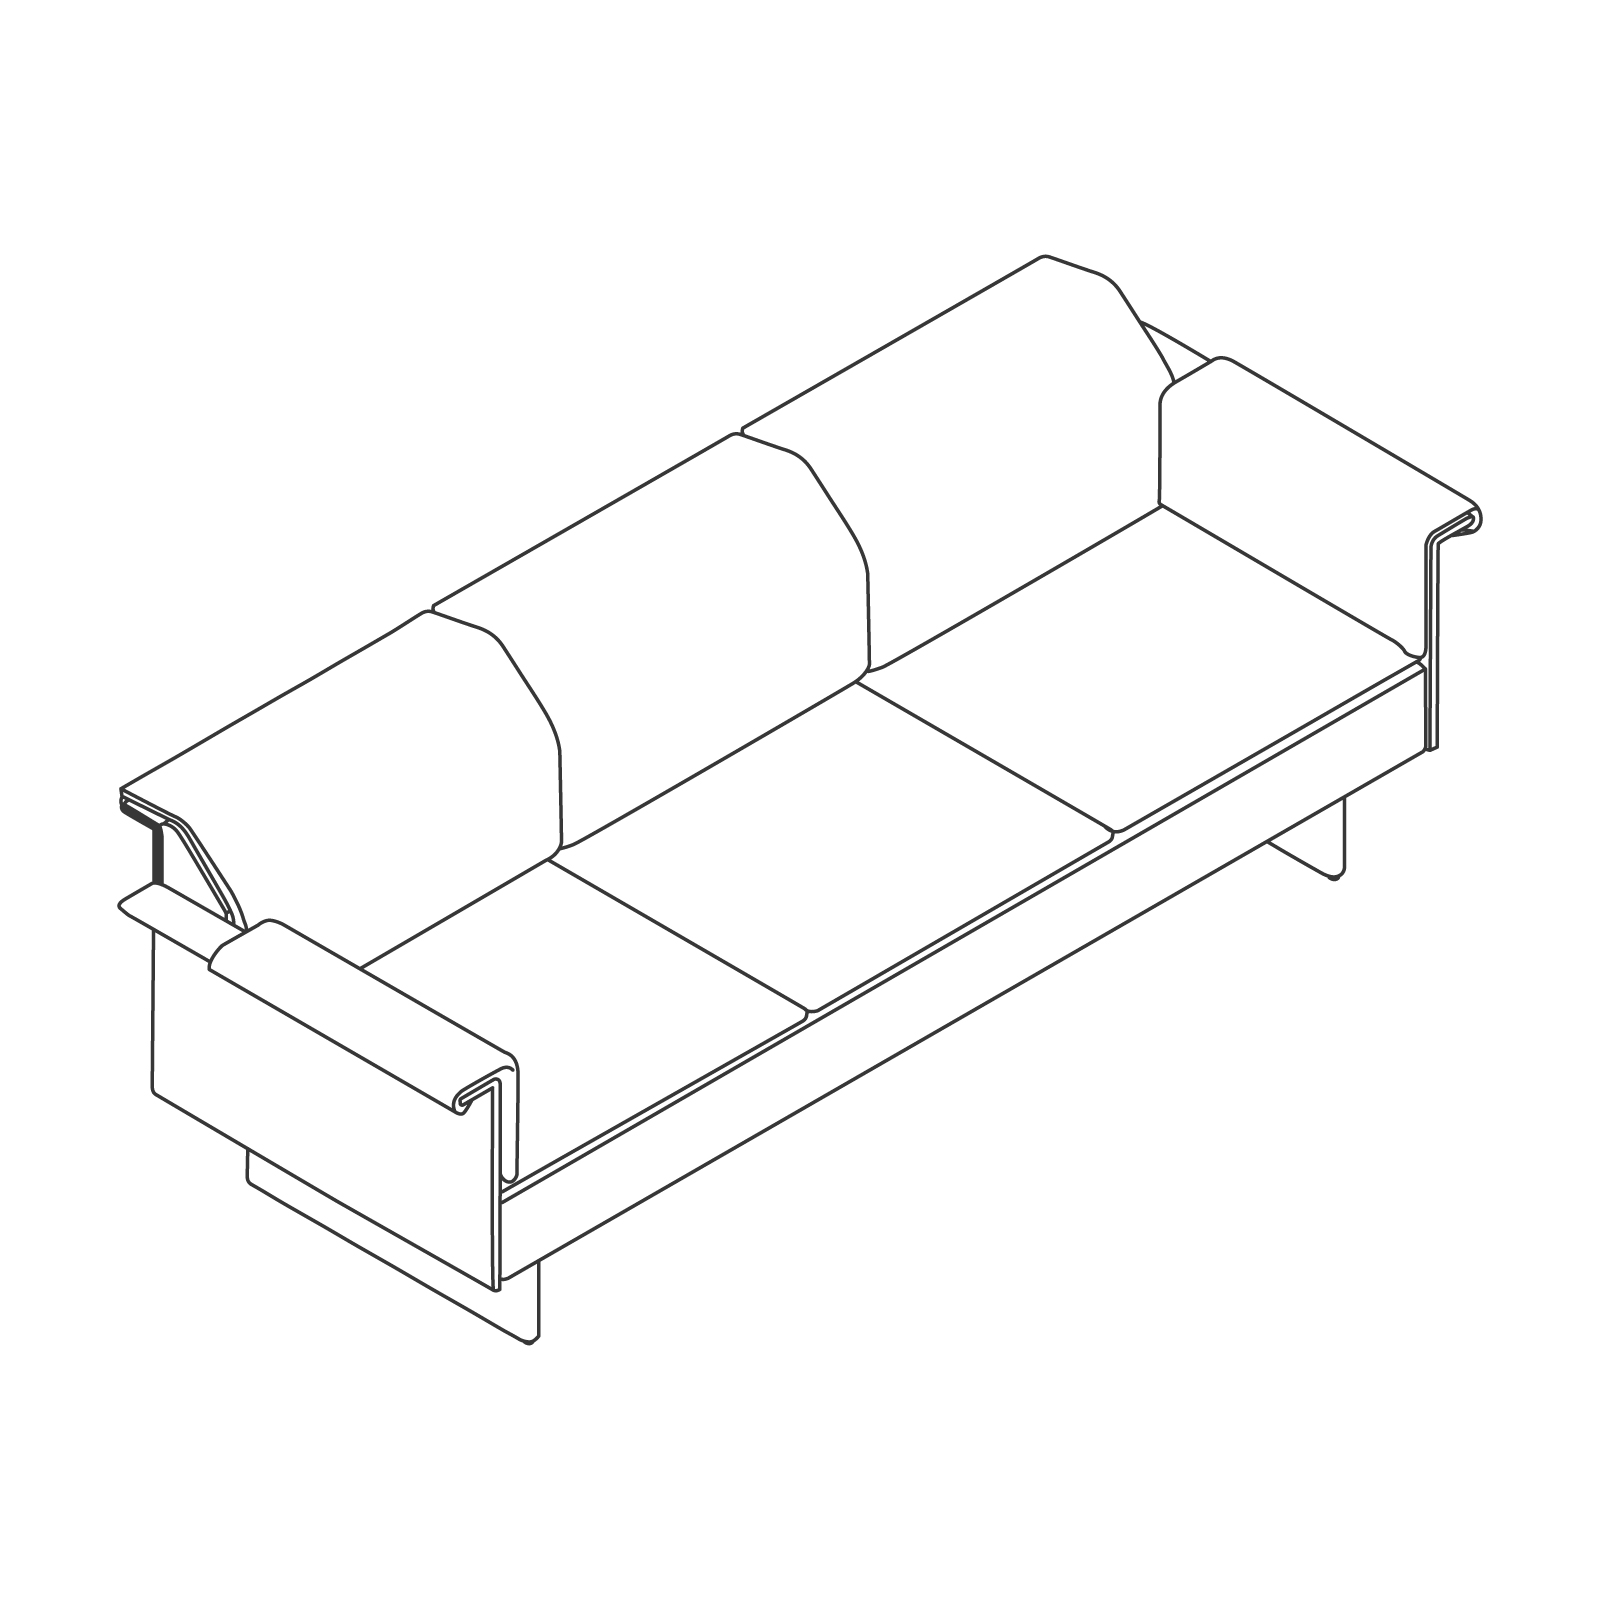 线描图 - Mantle沙发–带扶手